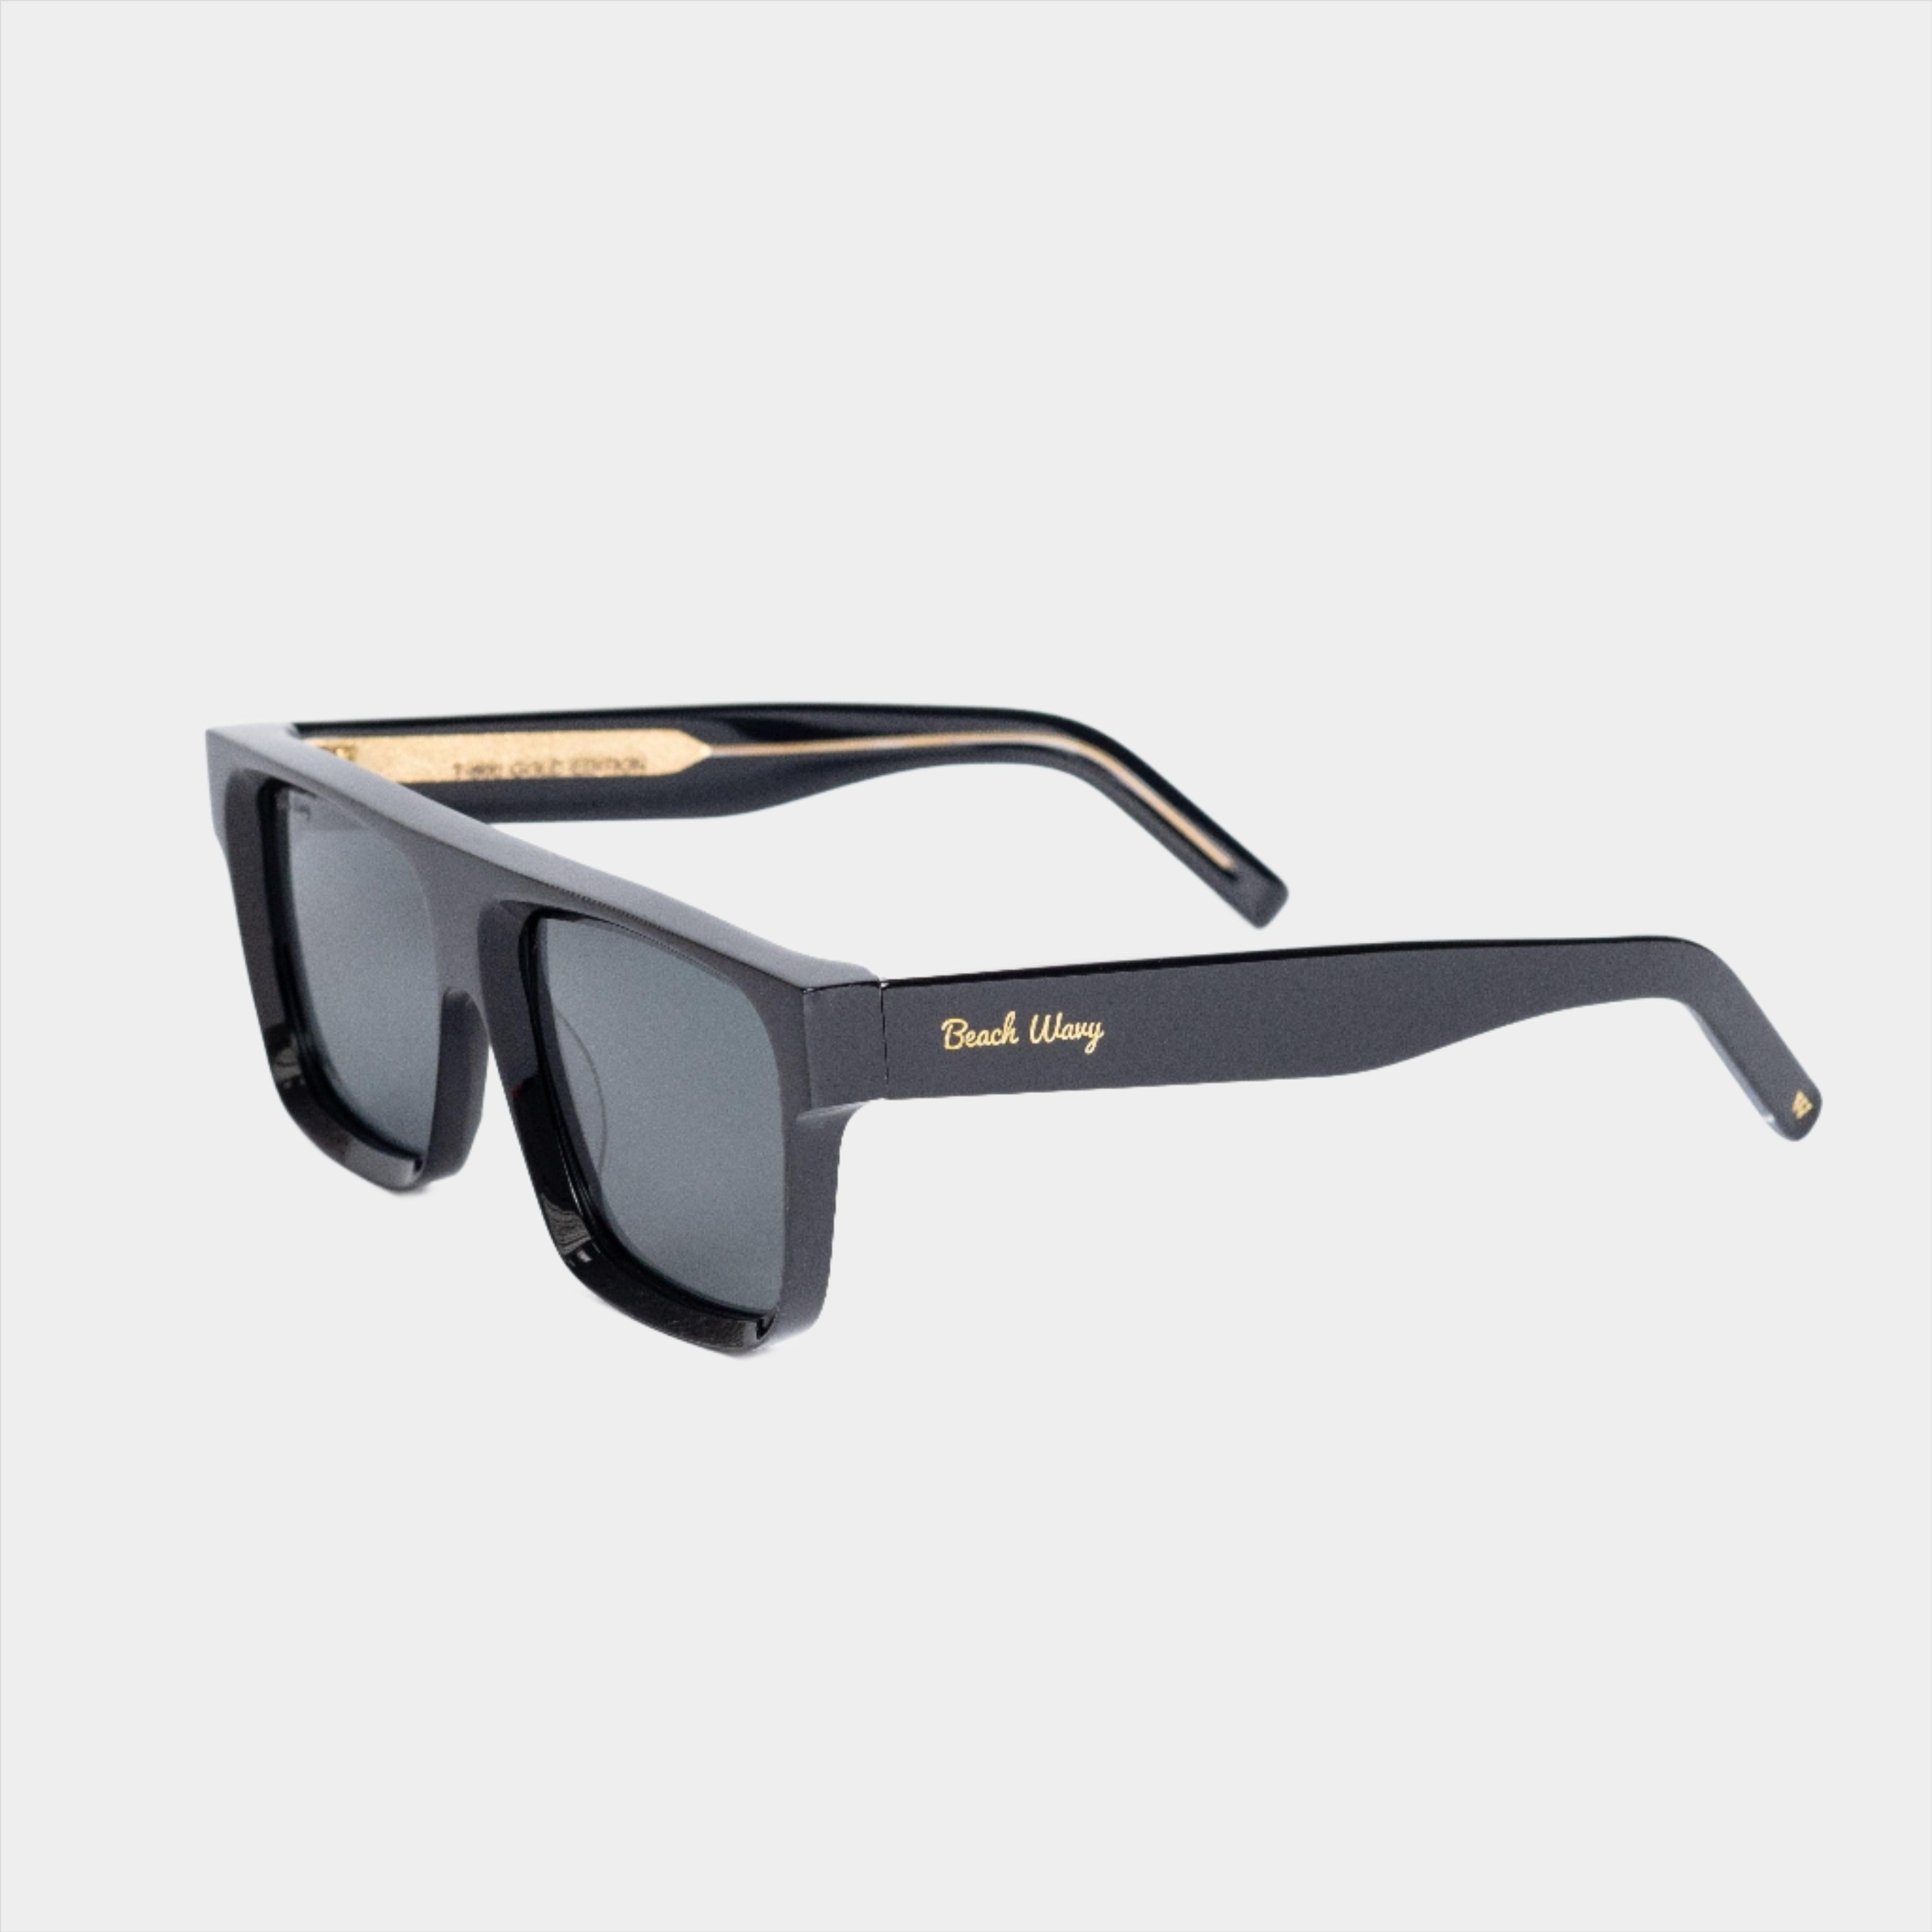 BEACH WAVY Sunglasses Oversized / Black / Polarized Cat.3 BEACH WAVY - T-800 - GOLD EDITION